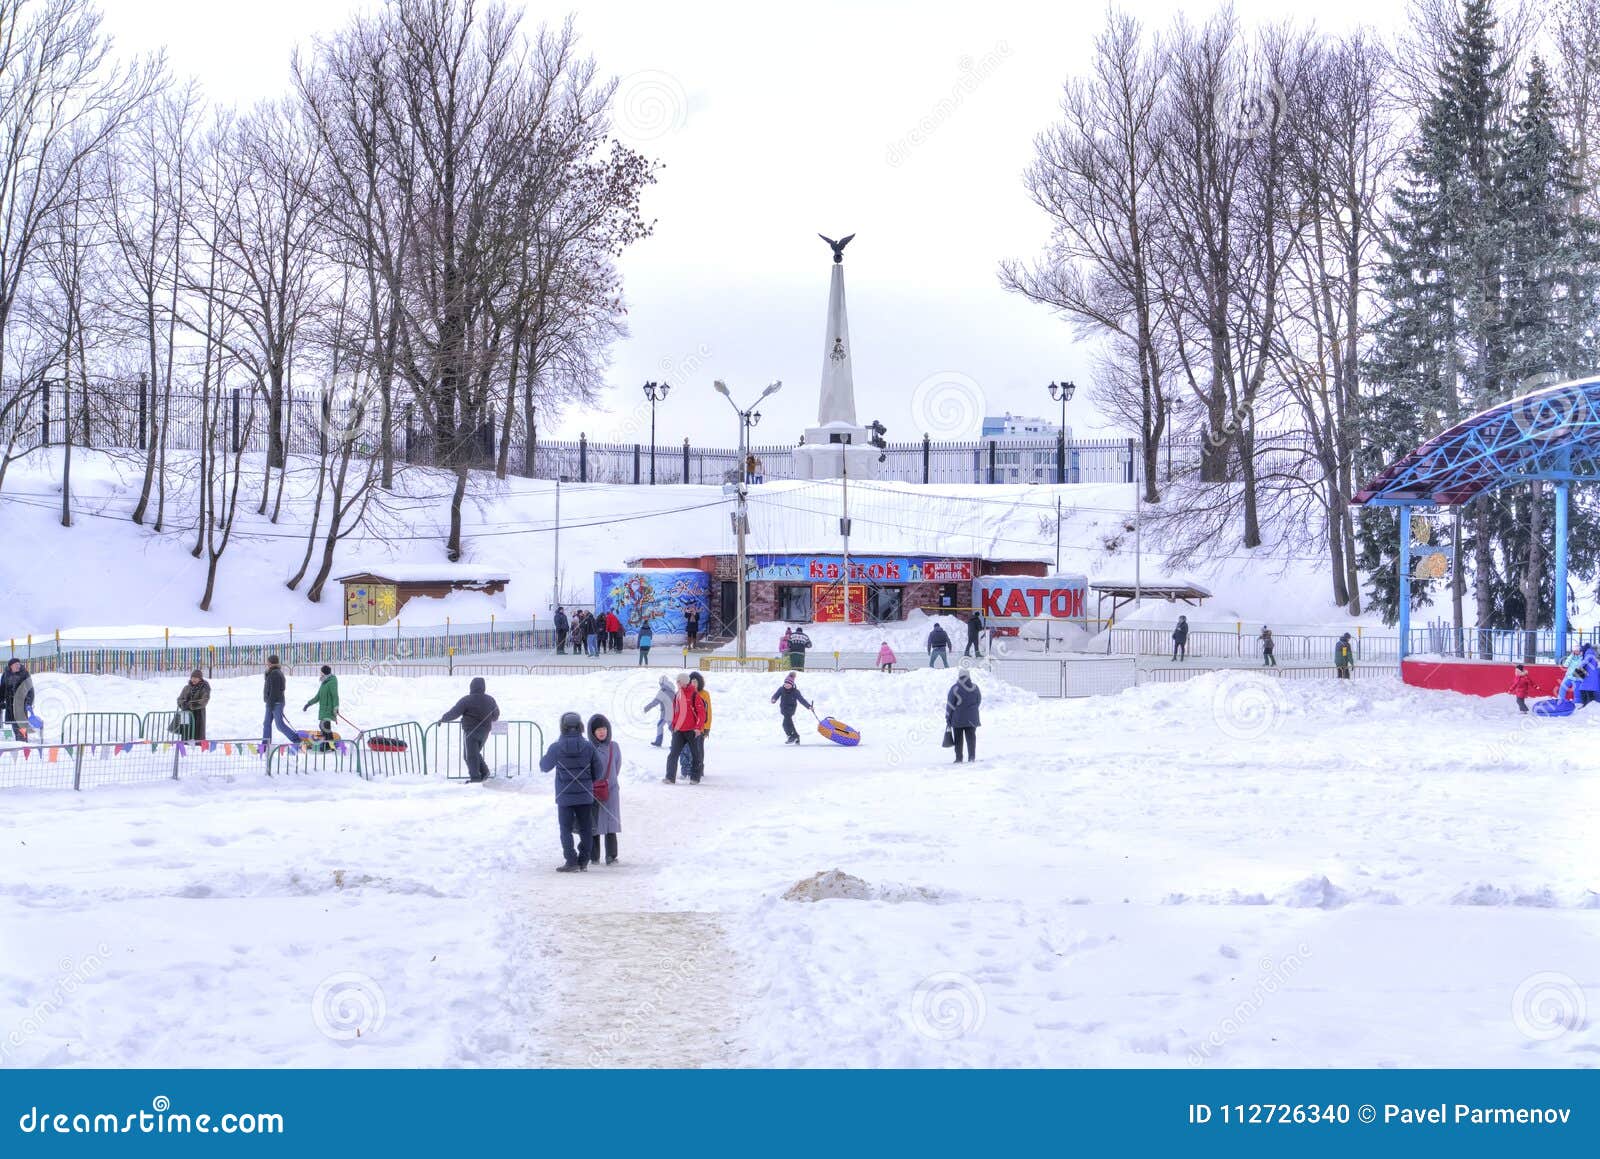 Smolensk Lopatinsky Garden City Ice Rink Editorial Image Image